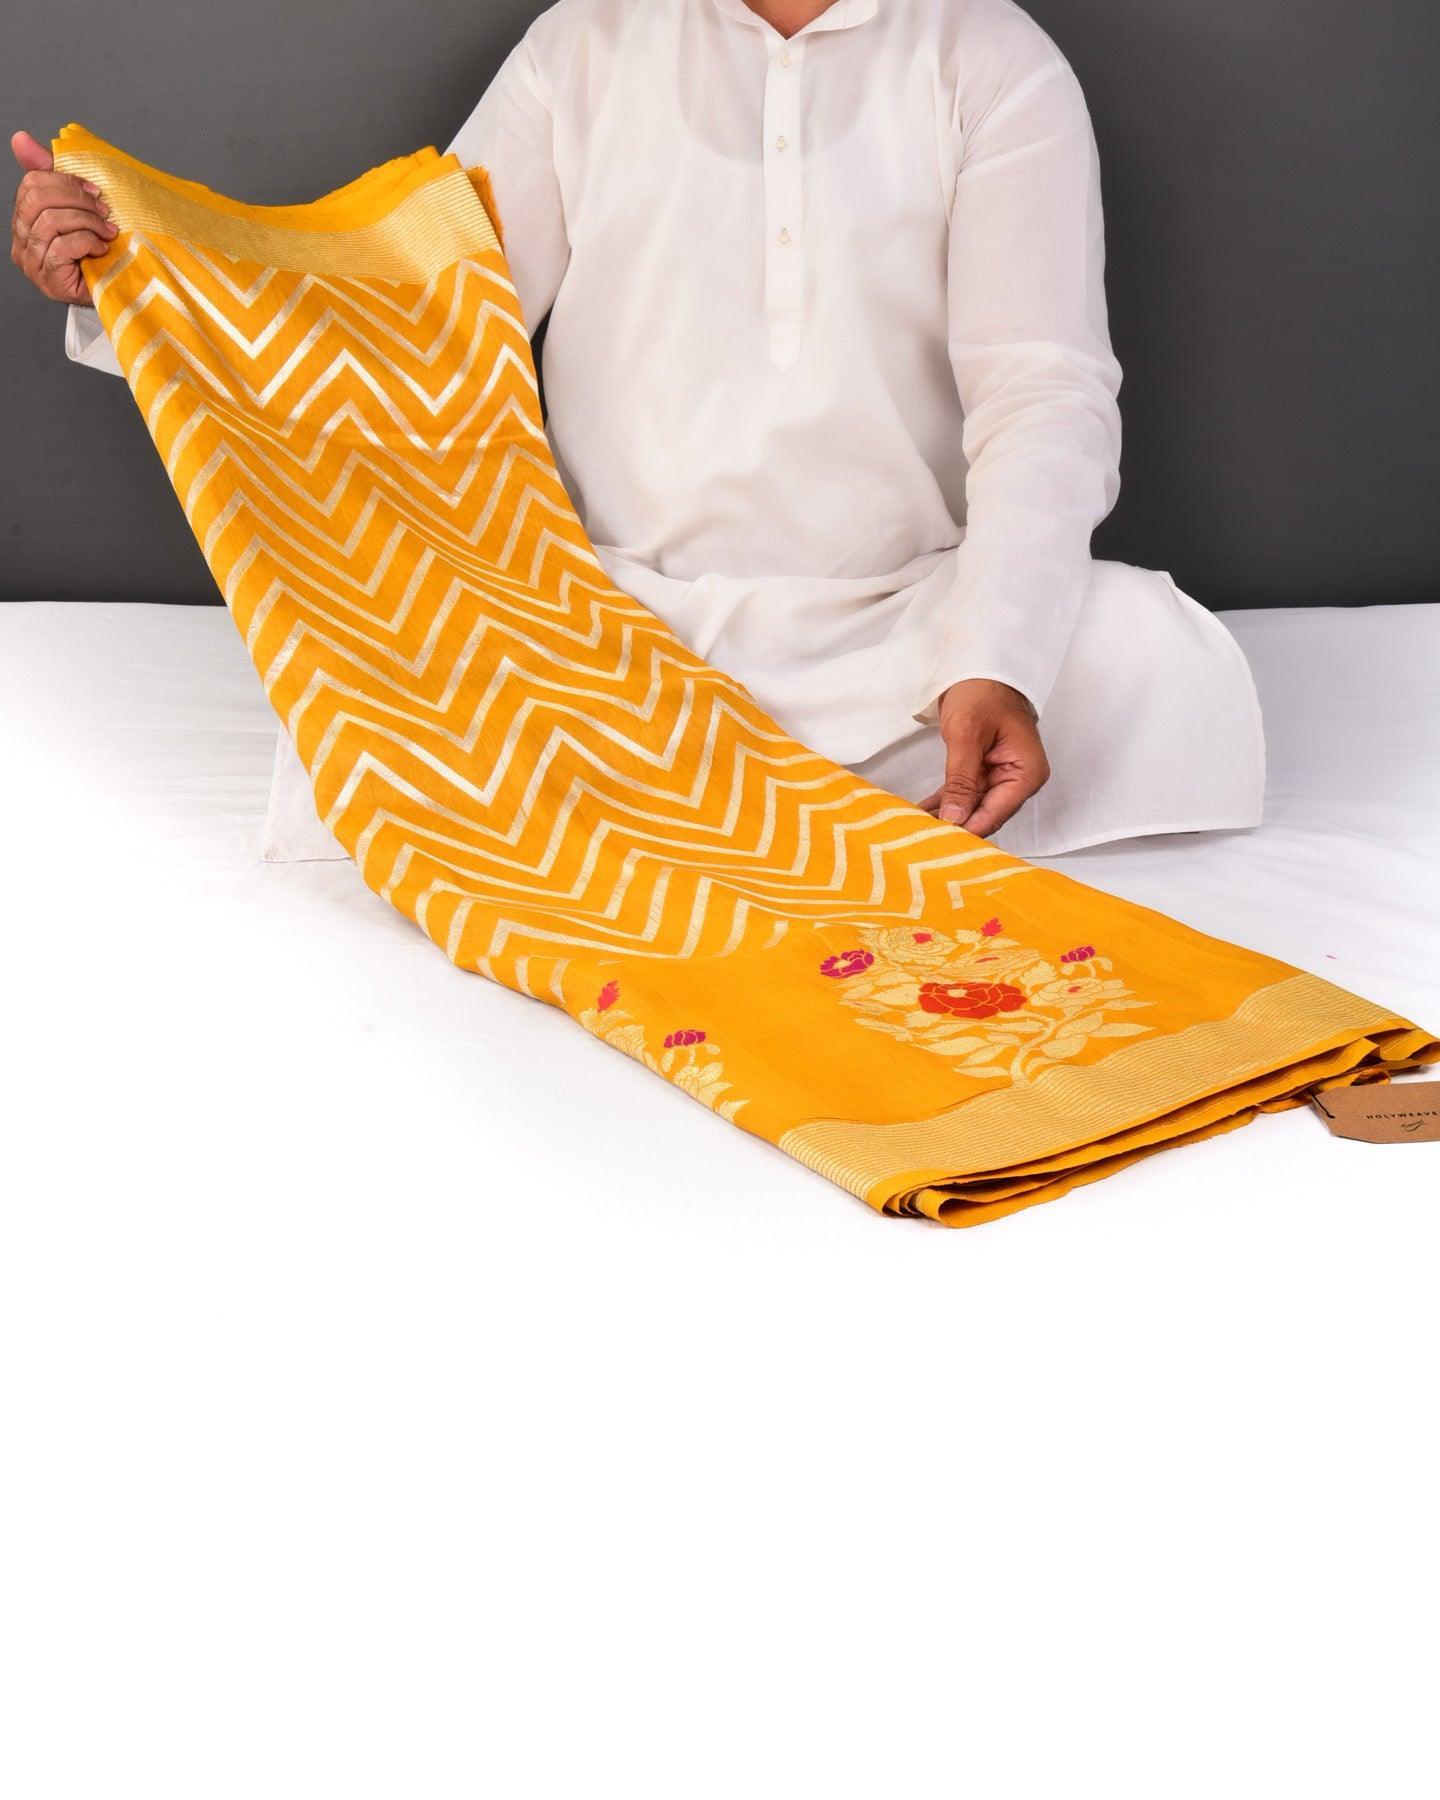 Marigold Yellow Banarasi Chauhara Meena Cutwork Brocade Handwoven Tasar Silk Saree - By HolyWeaves, Benares